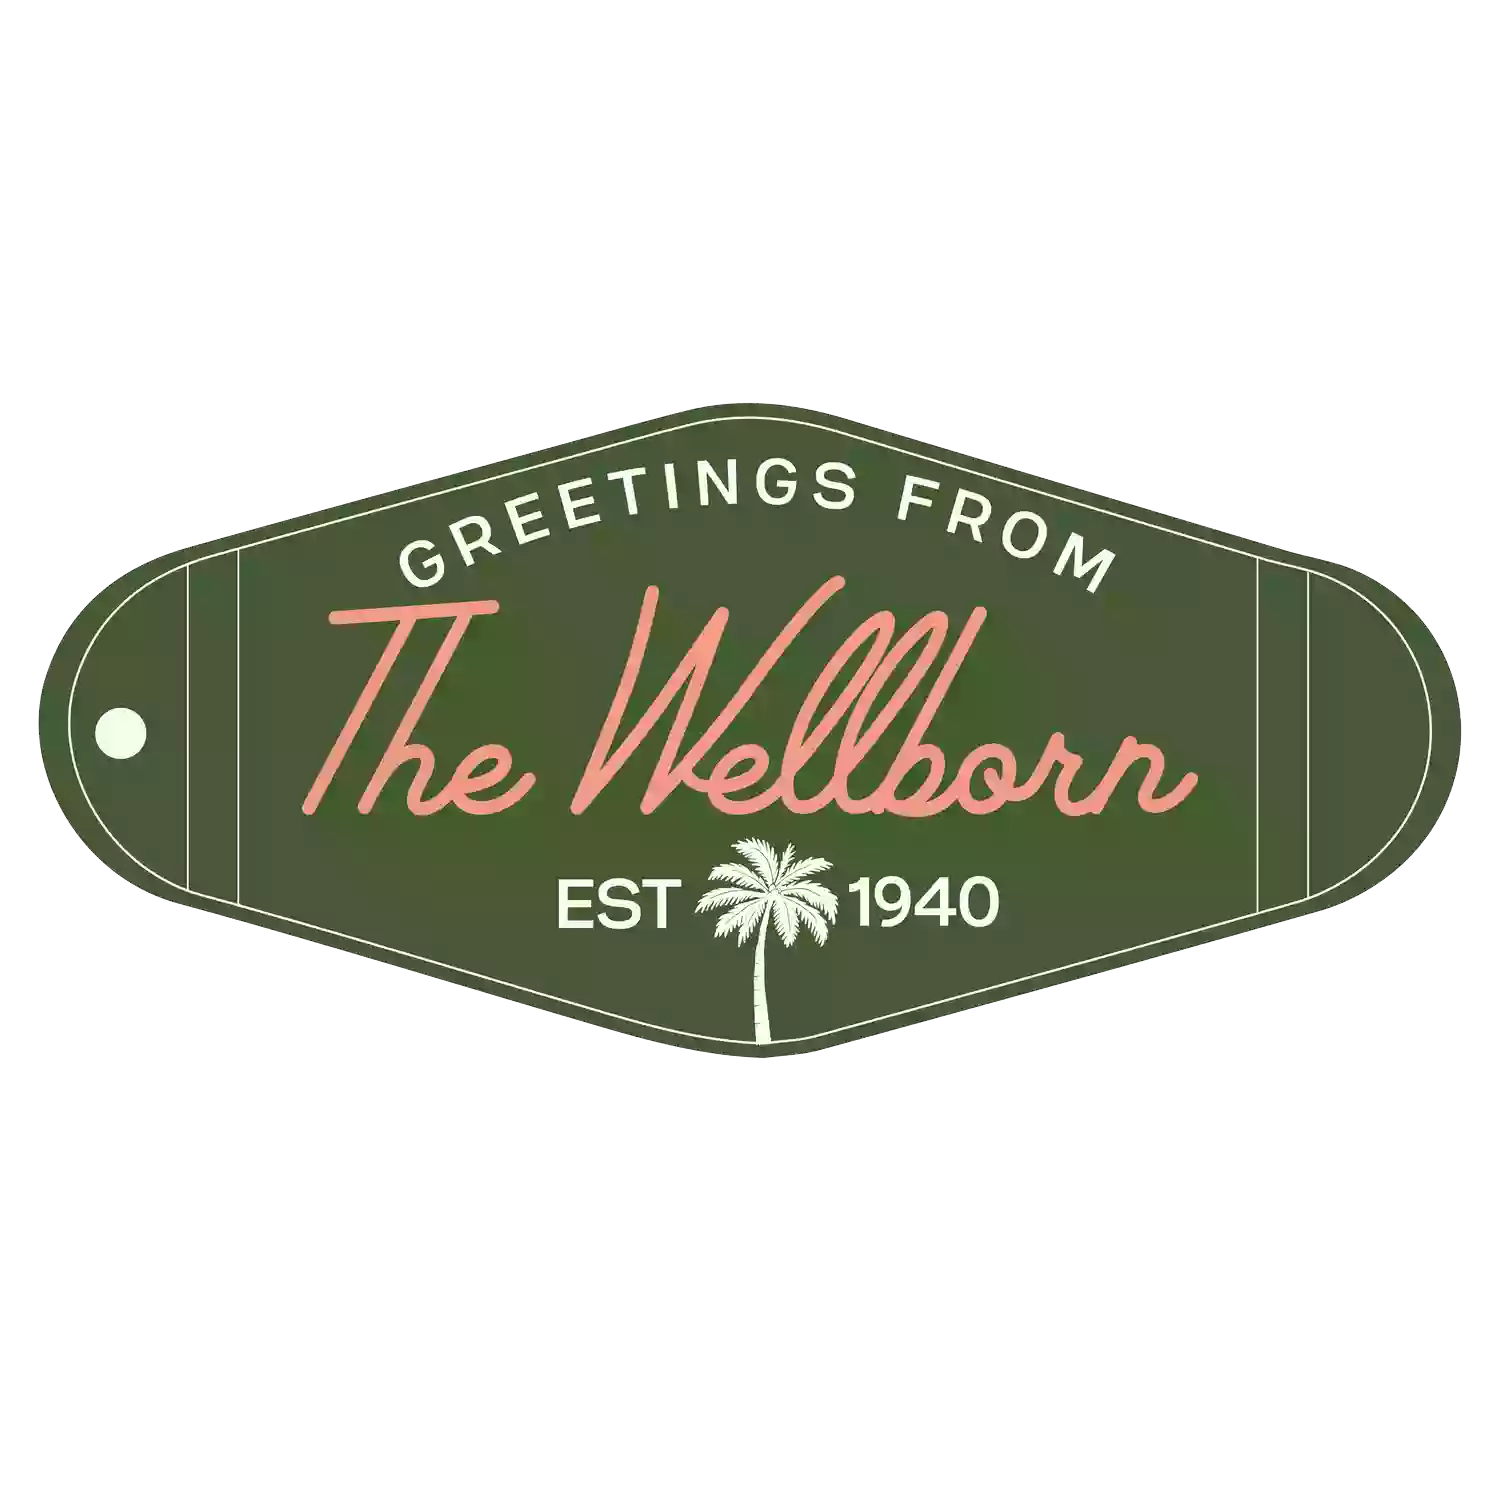 The Wellborn